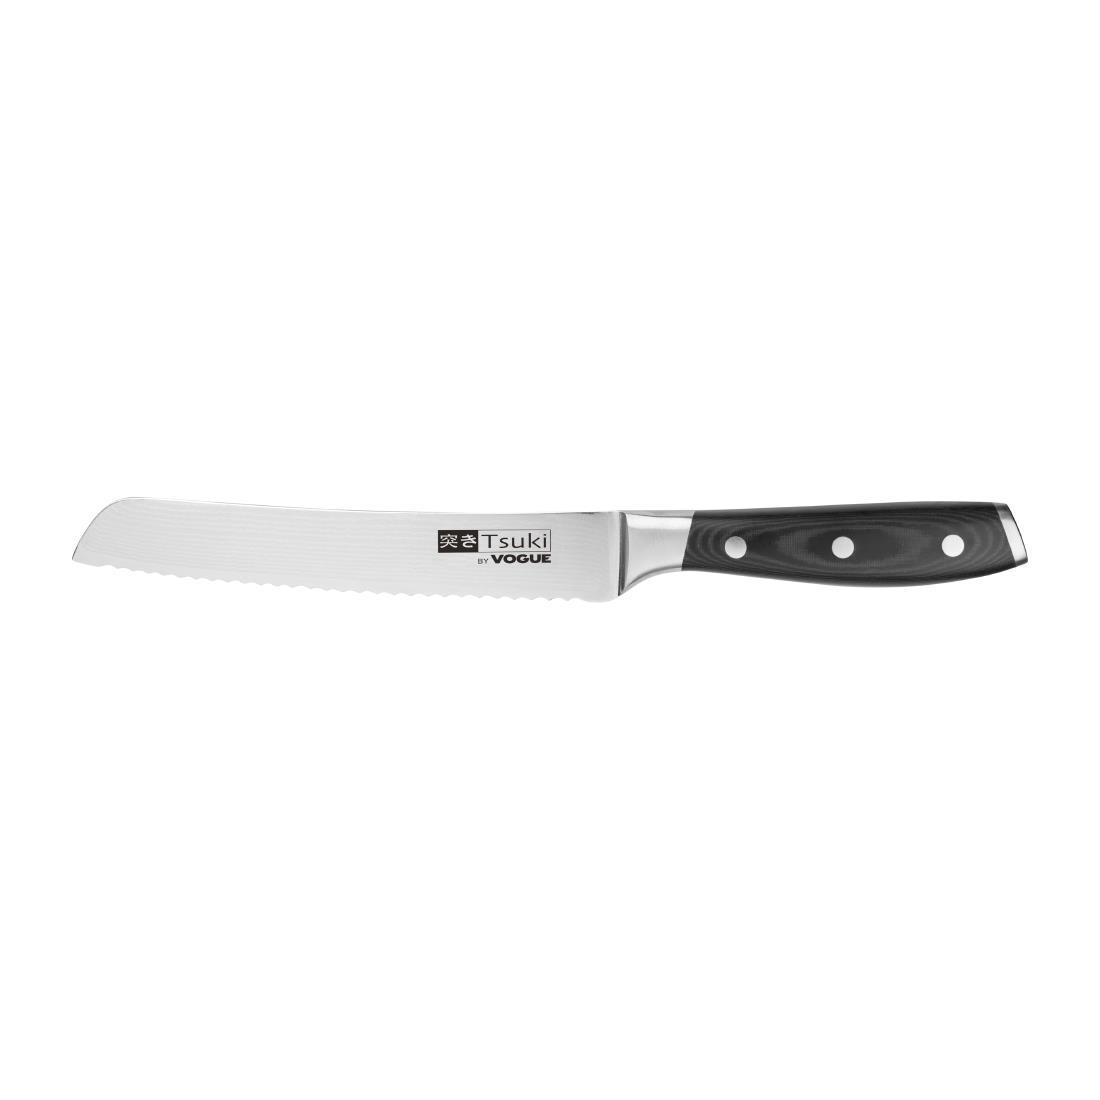 Vogue Tsuki Series 7 Bread Knife 20.5cm - CF842  - 2